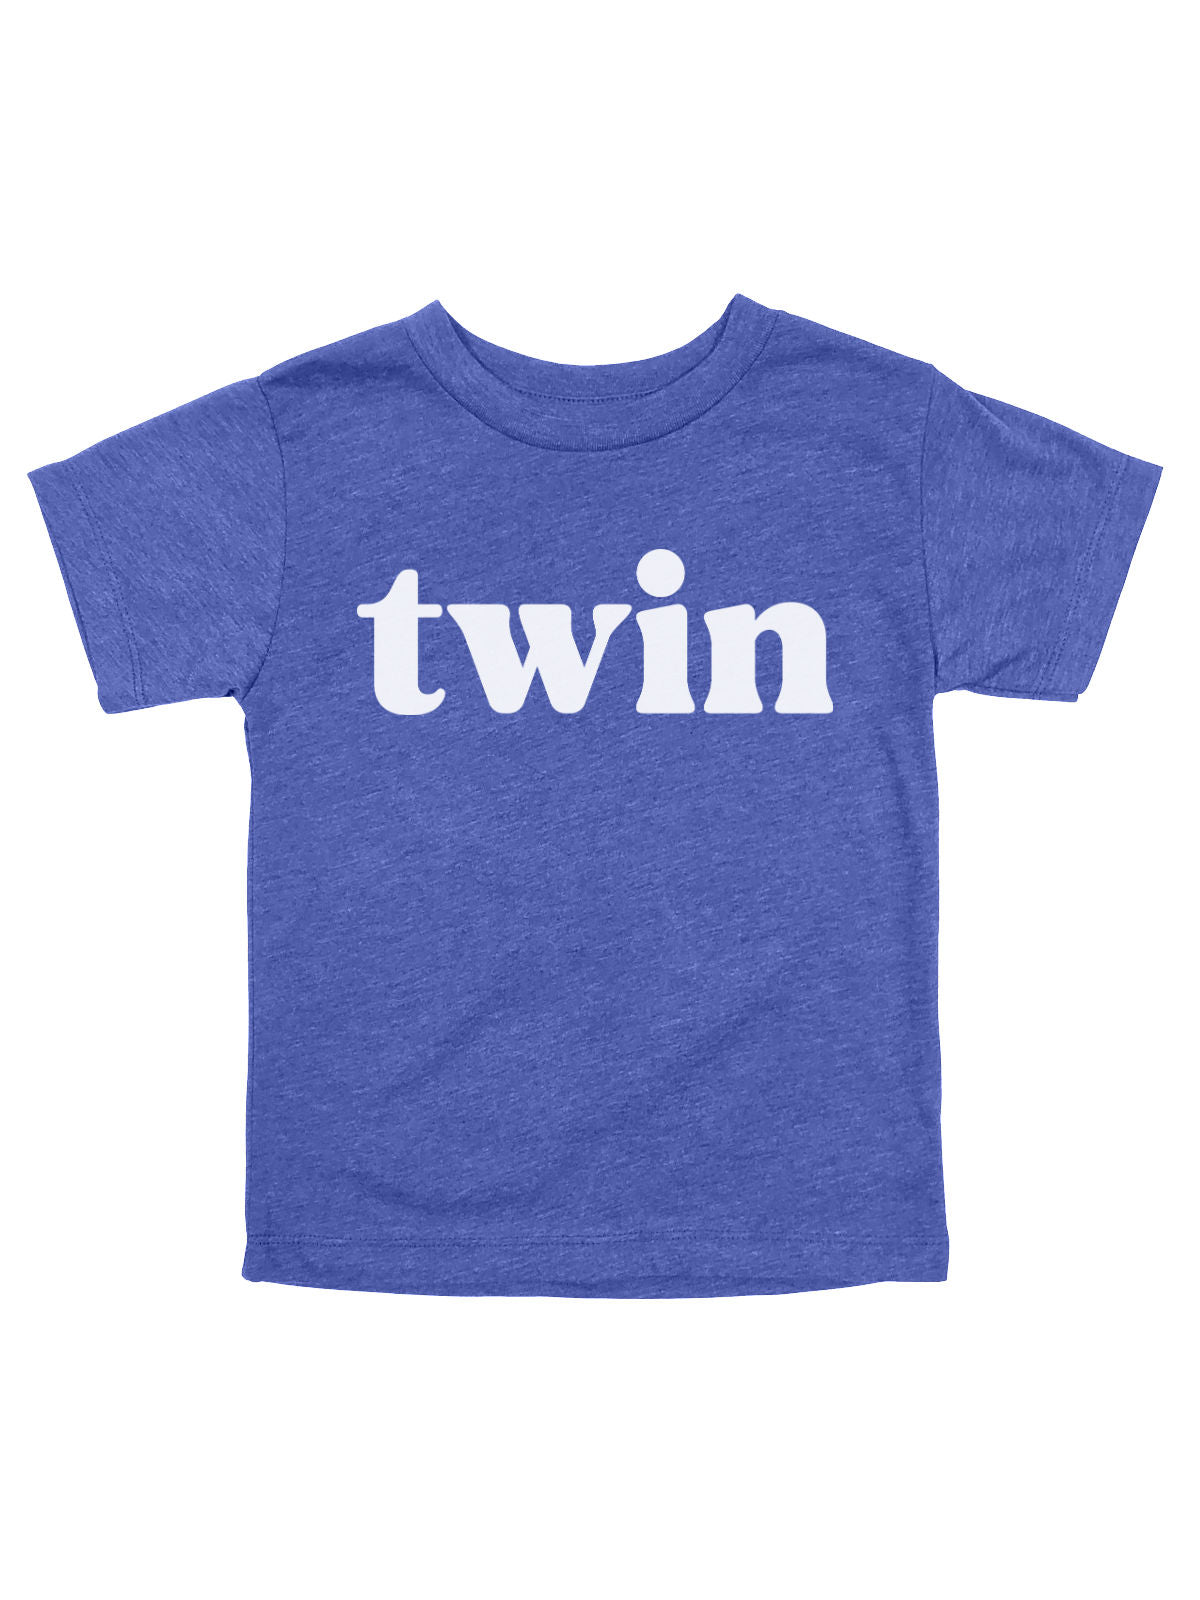 Twin Kids Shirt in Blue